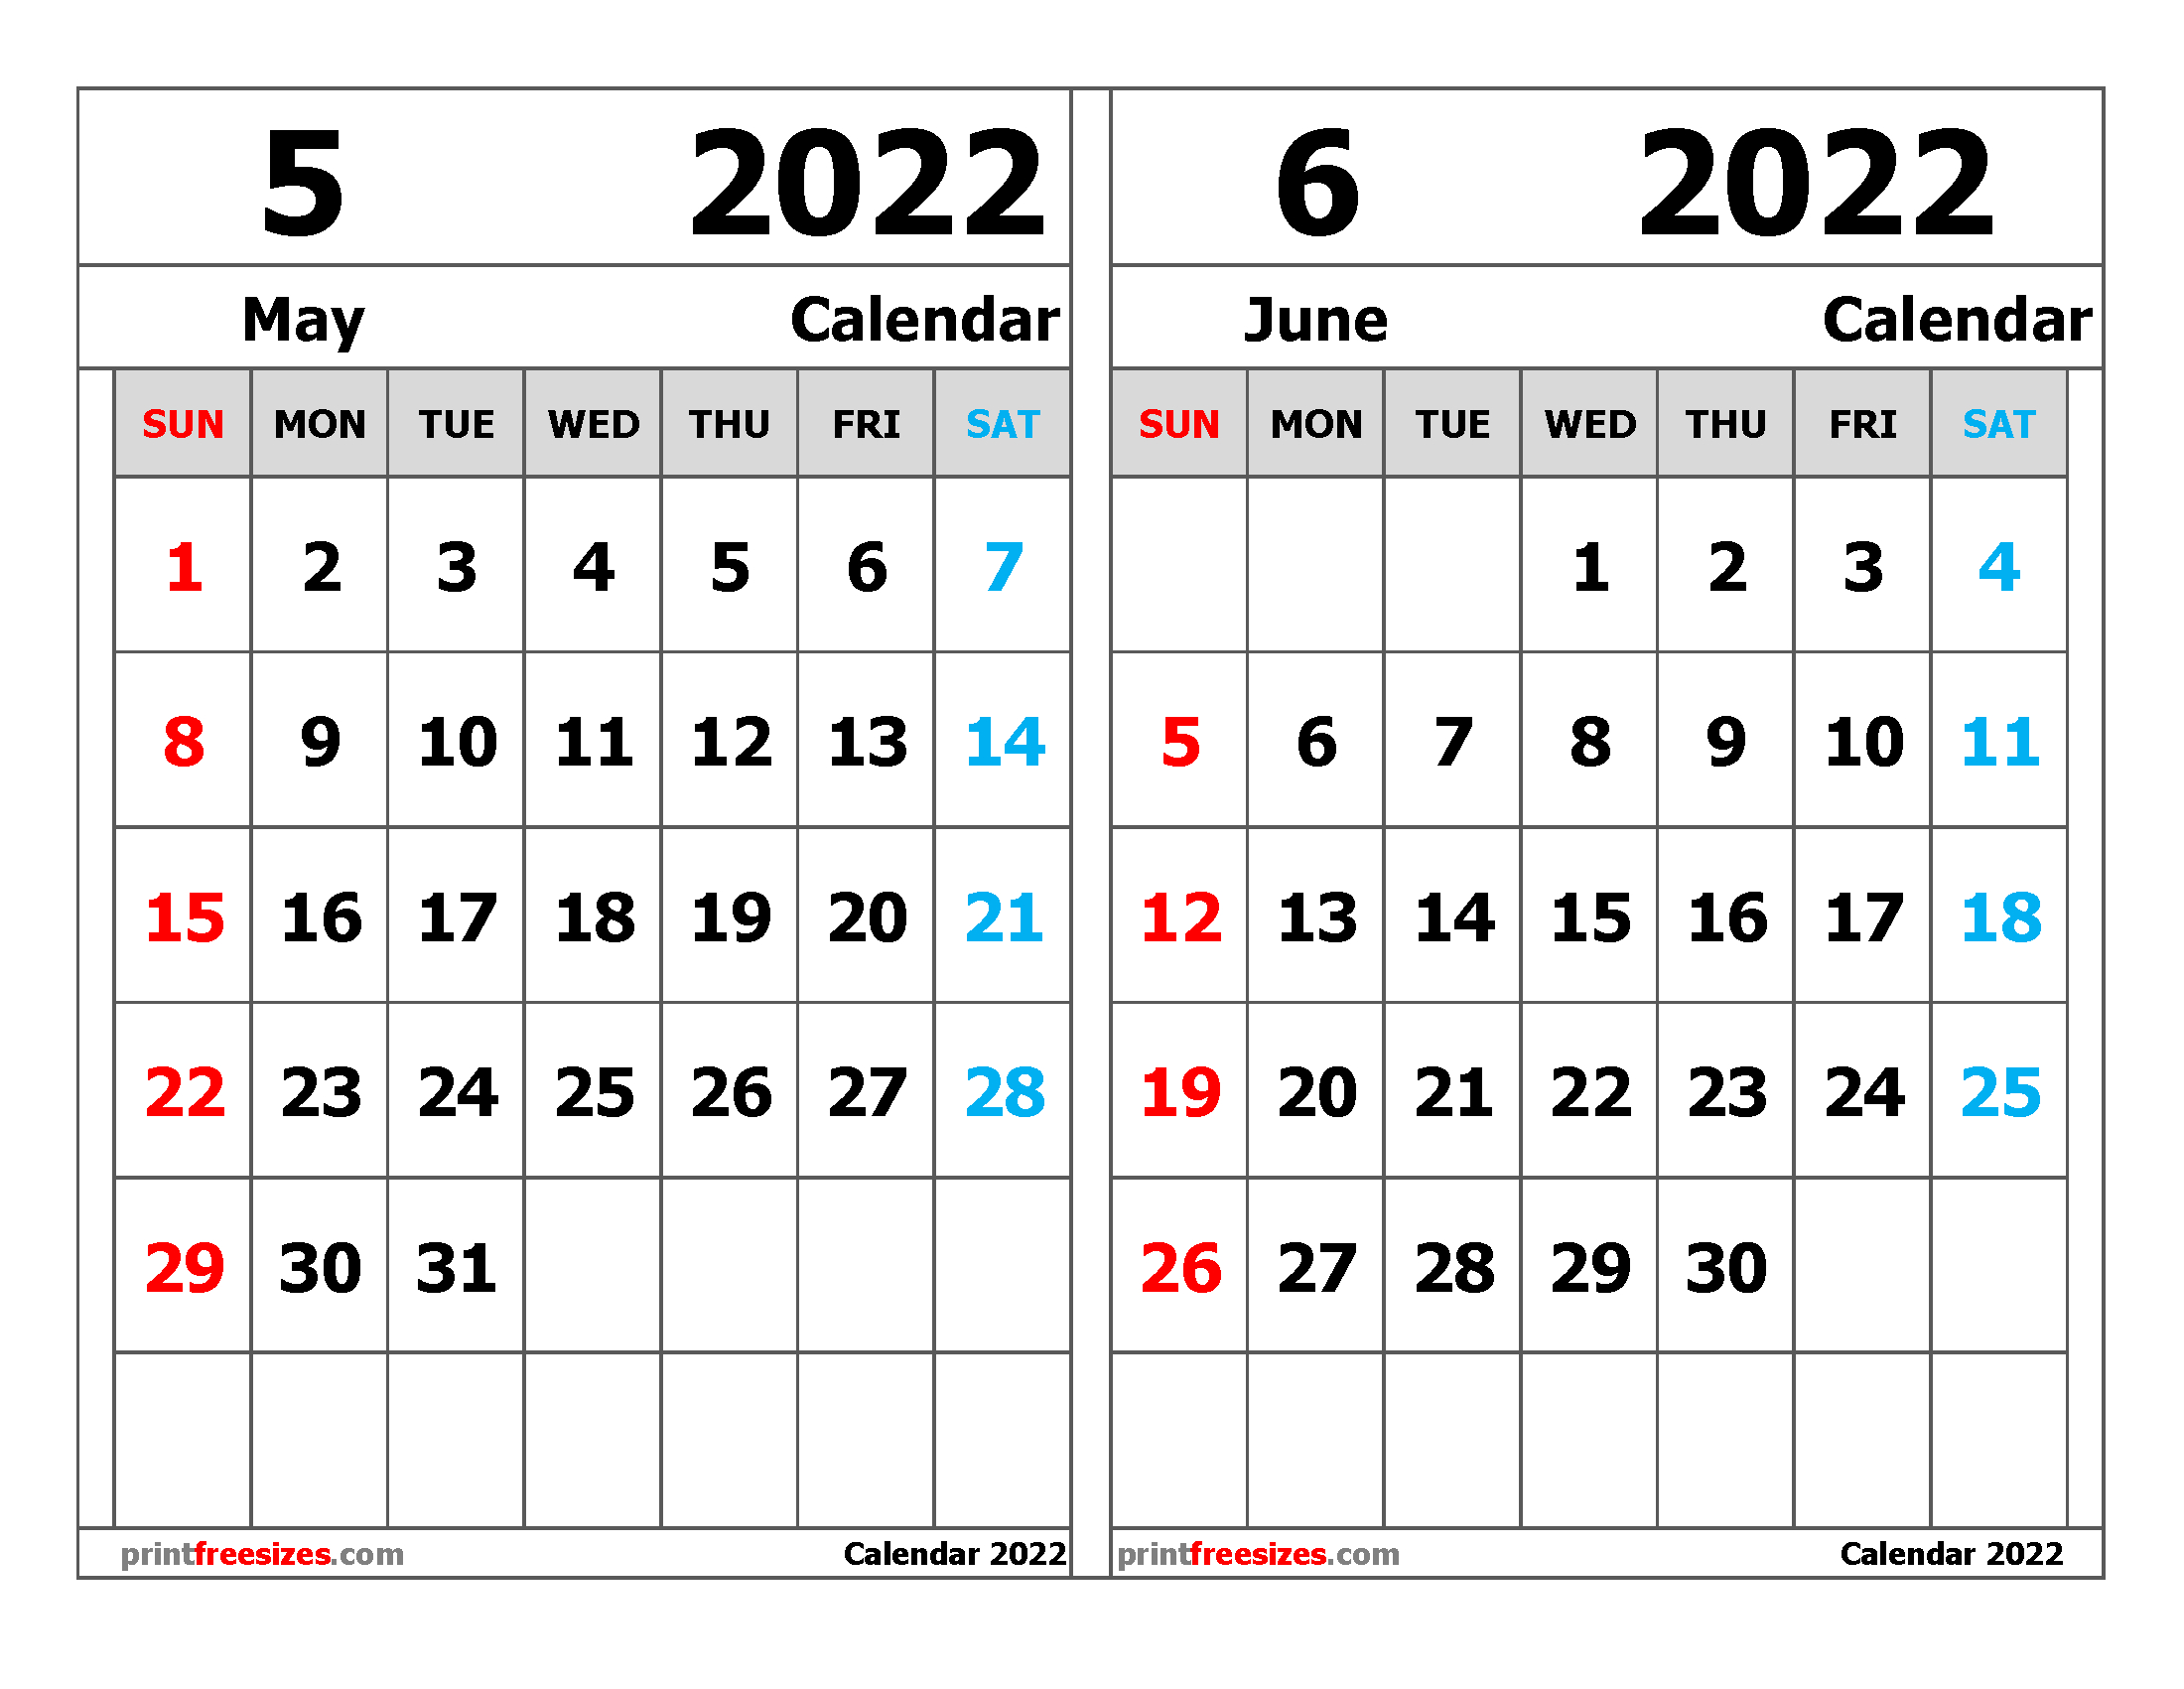 Get May 5 2022 Calendar